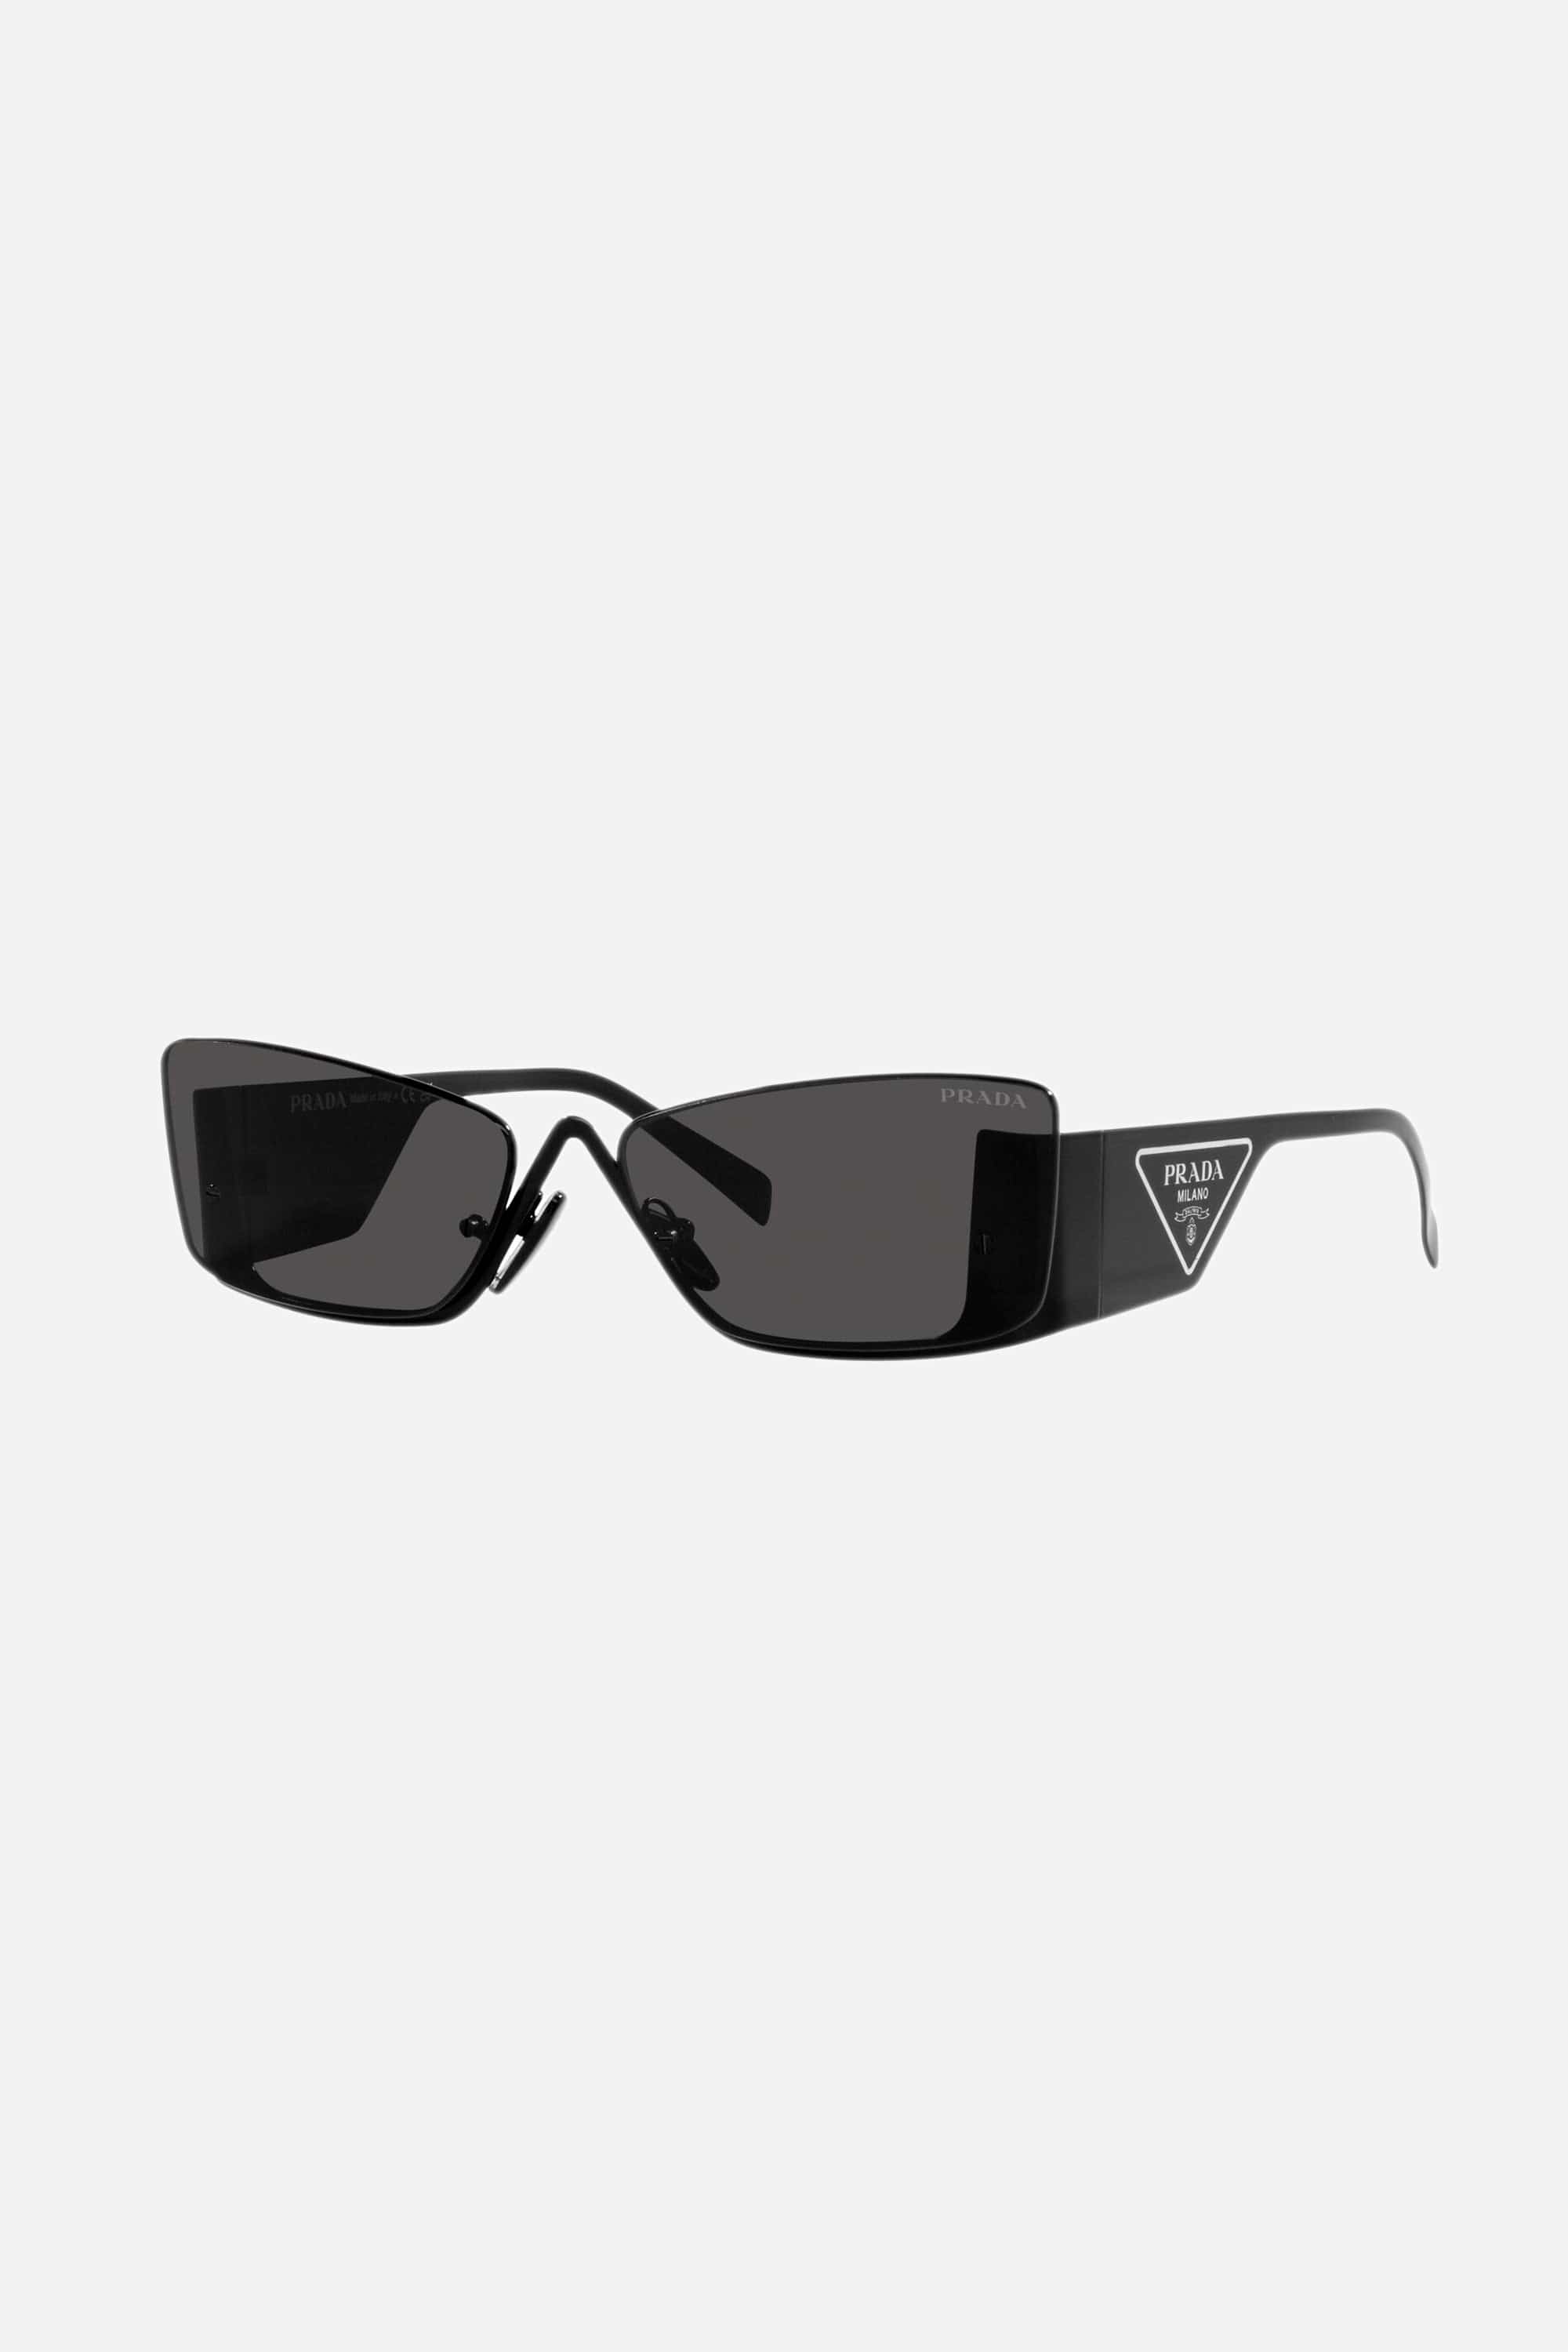 Prada flat top black sunglasses women Catwalk - Eyewear Club